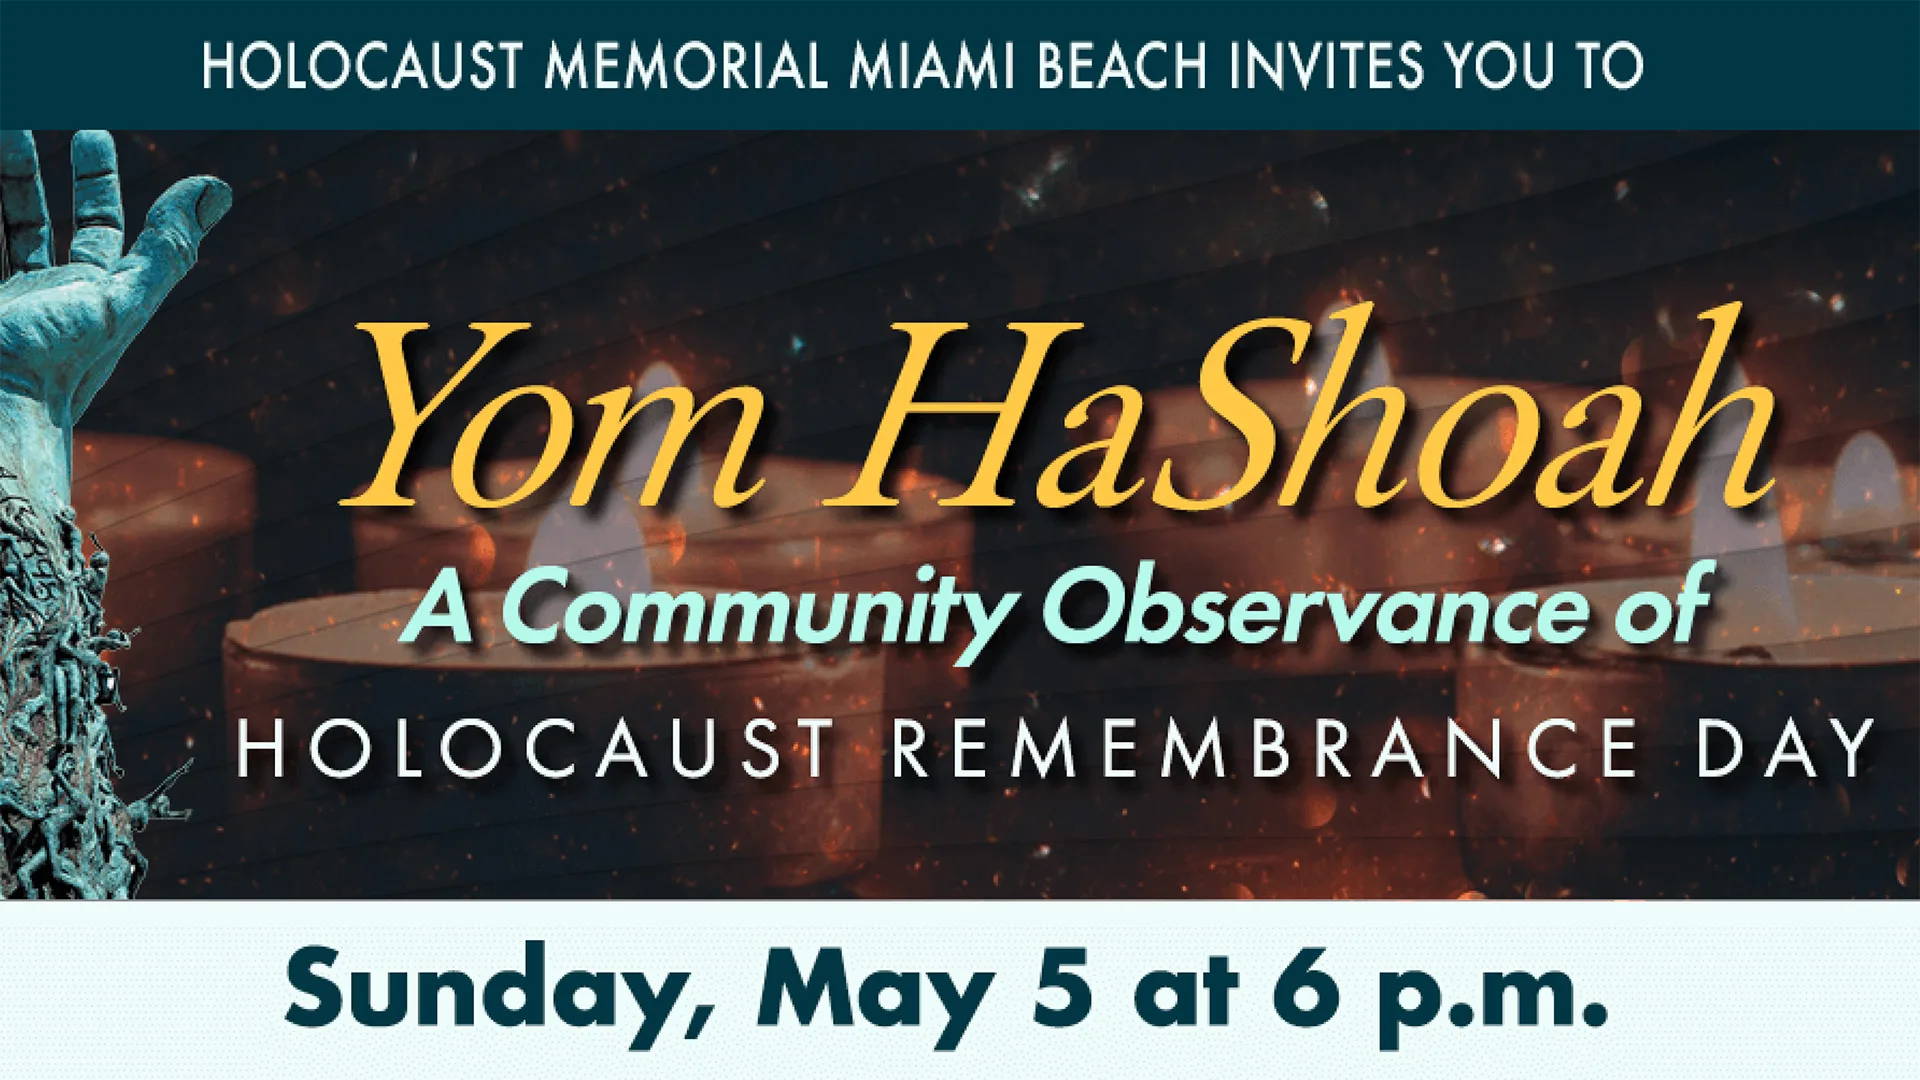 A Community Observance of Yom HaShoah